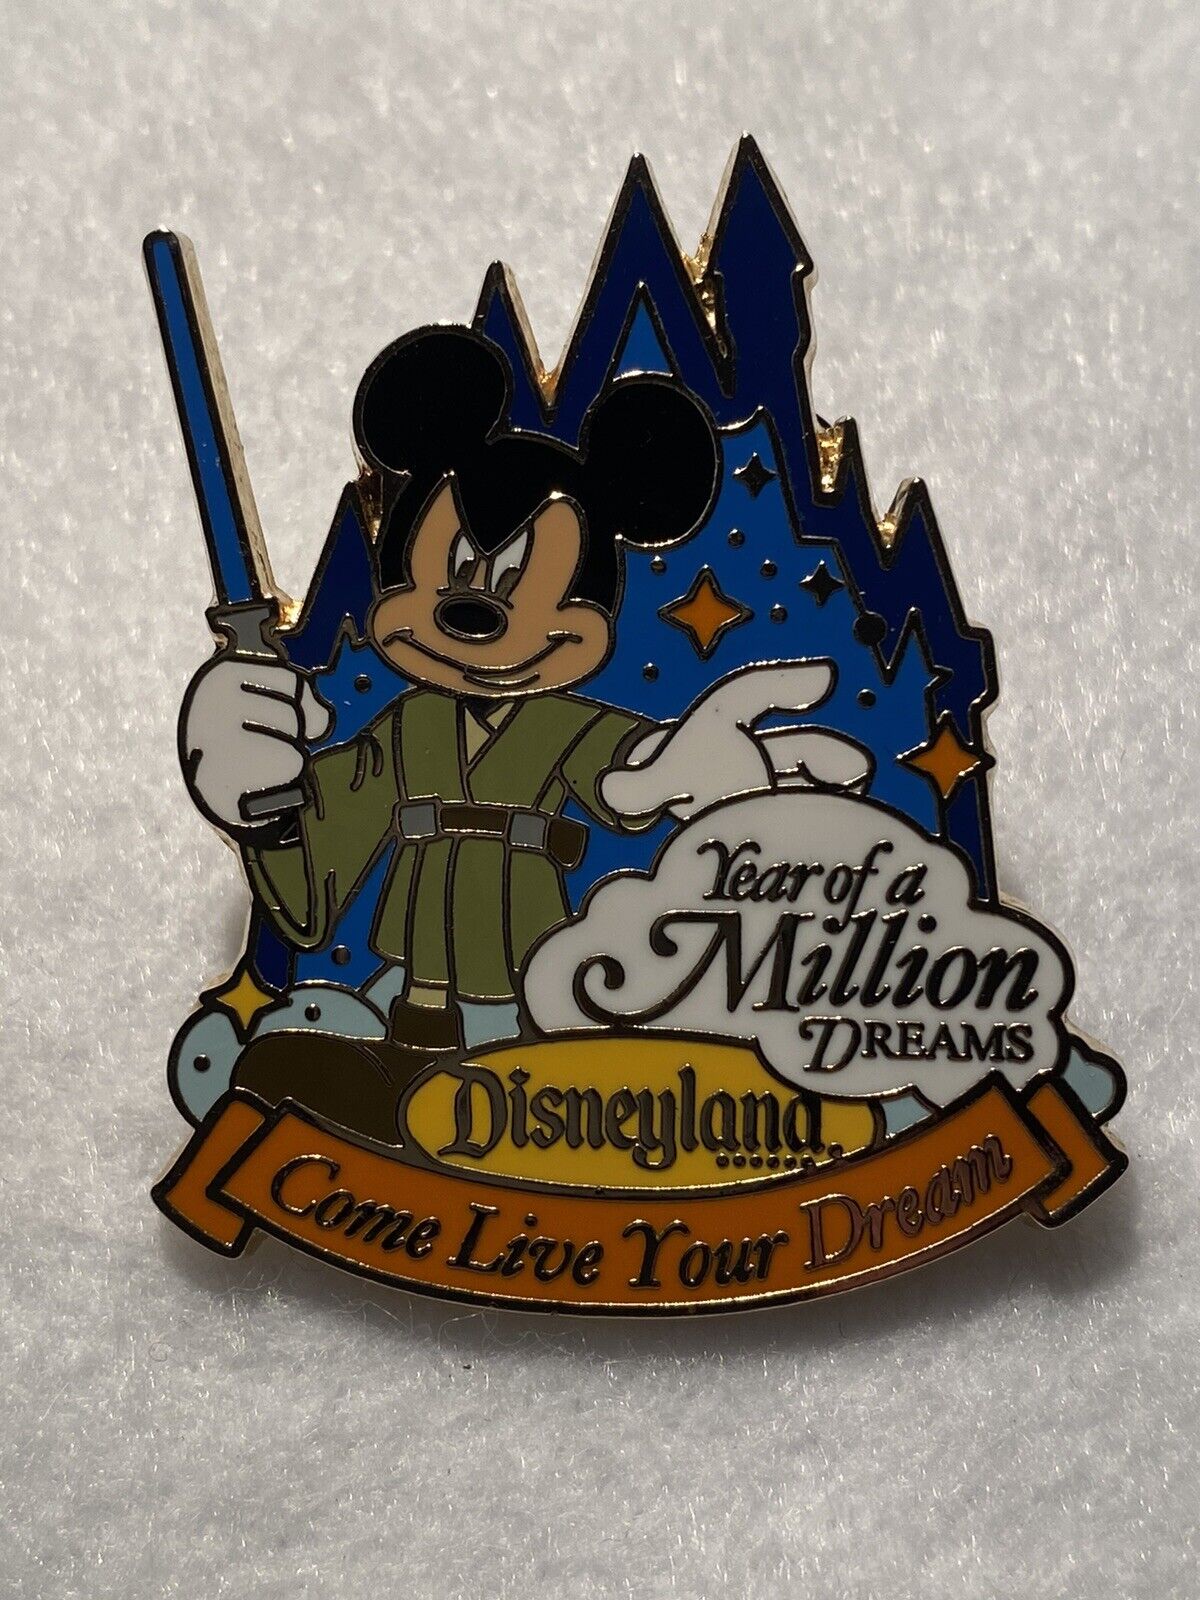 WDTC - Walt Disney Travel Company - Come Live Your Dreams - Jedi Mickey